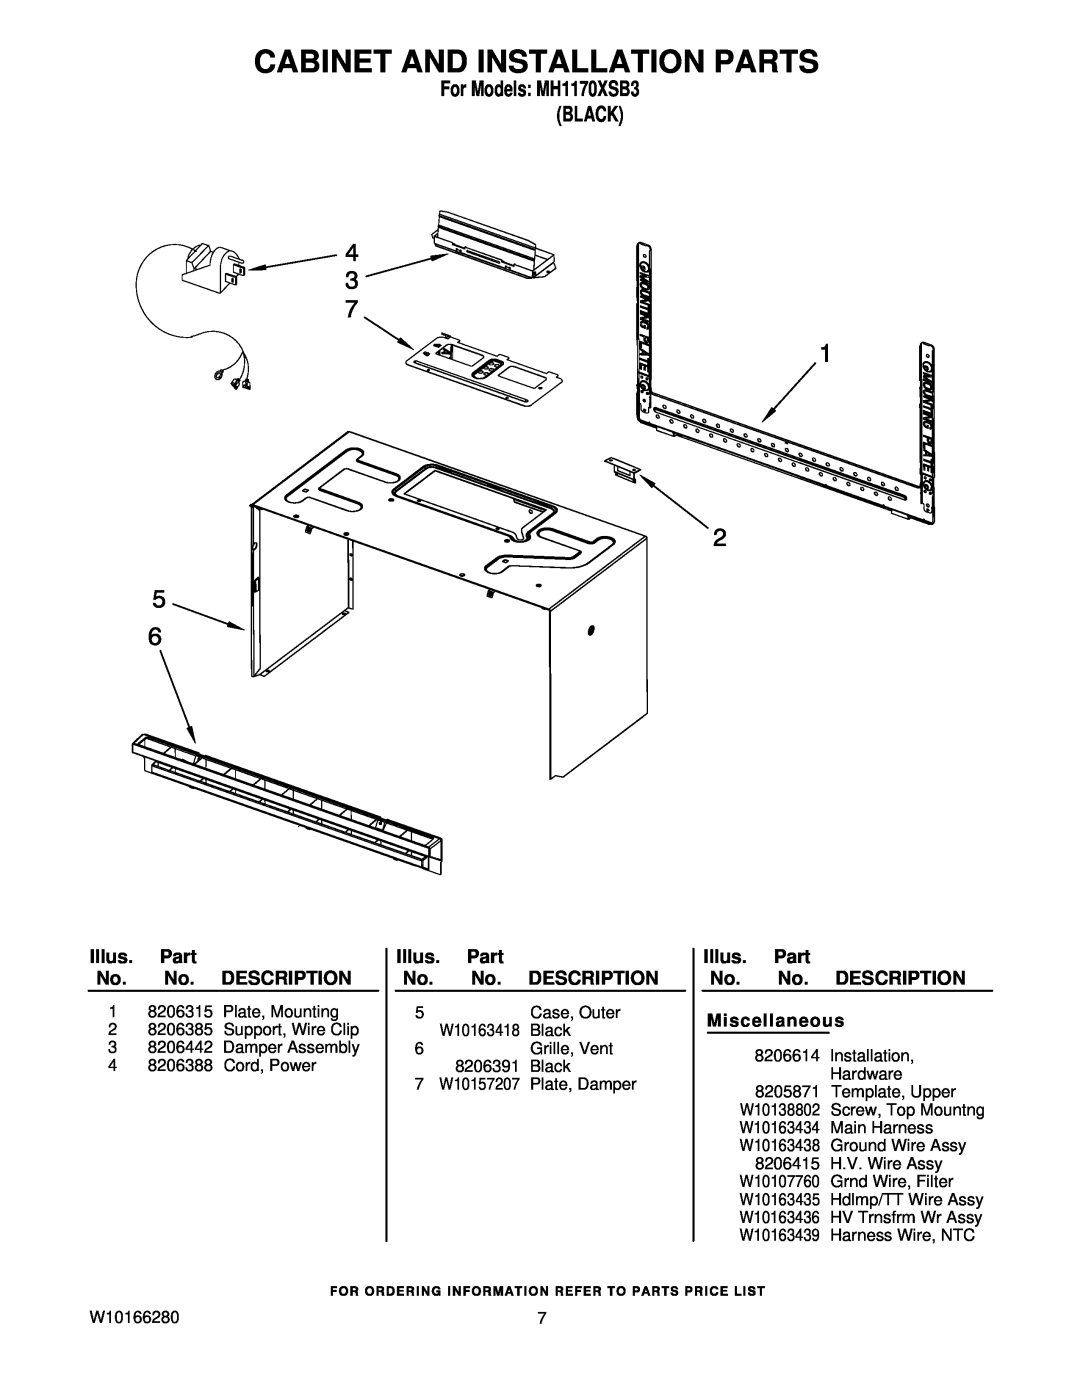 Whirlpool MH1170XSB3 manual Cabinet And Installation Parts, Illus. Part No. No. DESCRIPTION Miscellaneous 